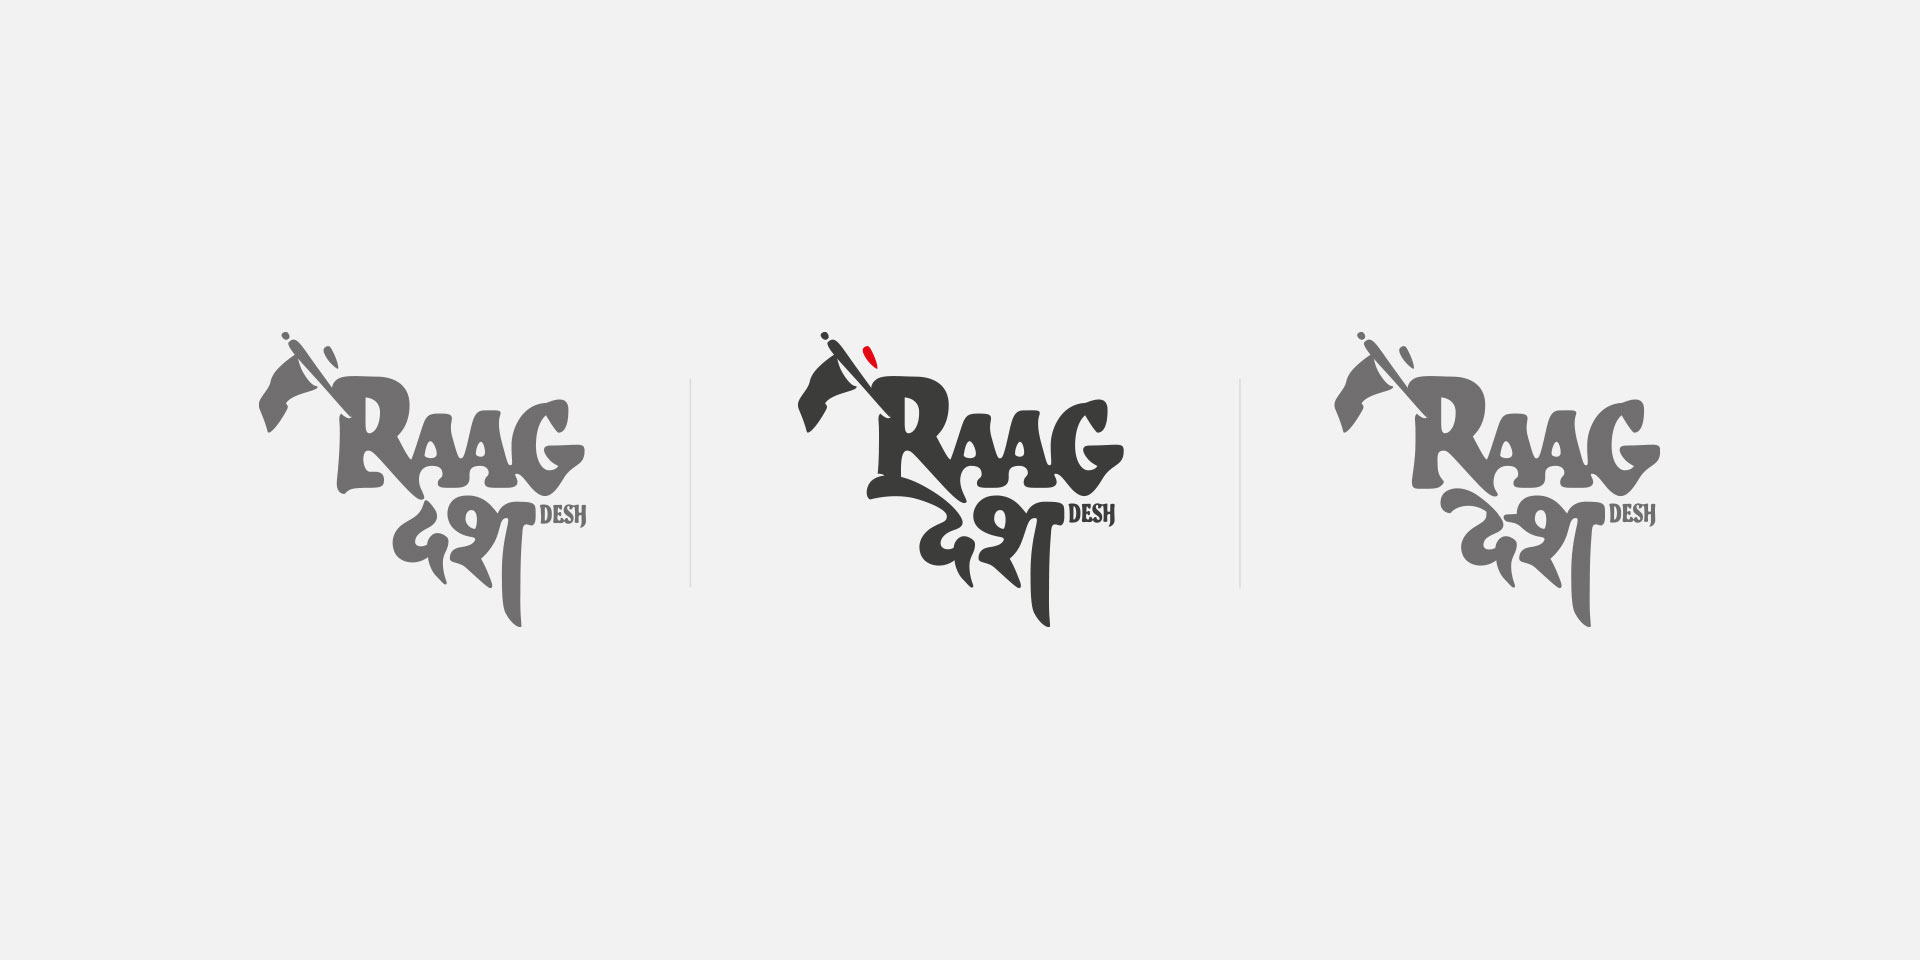 RaagDesh Bollywood Movie - Identity Design - Logotype shade